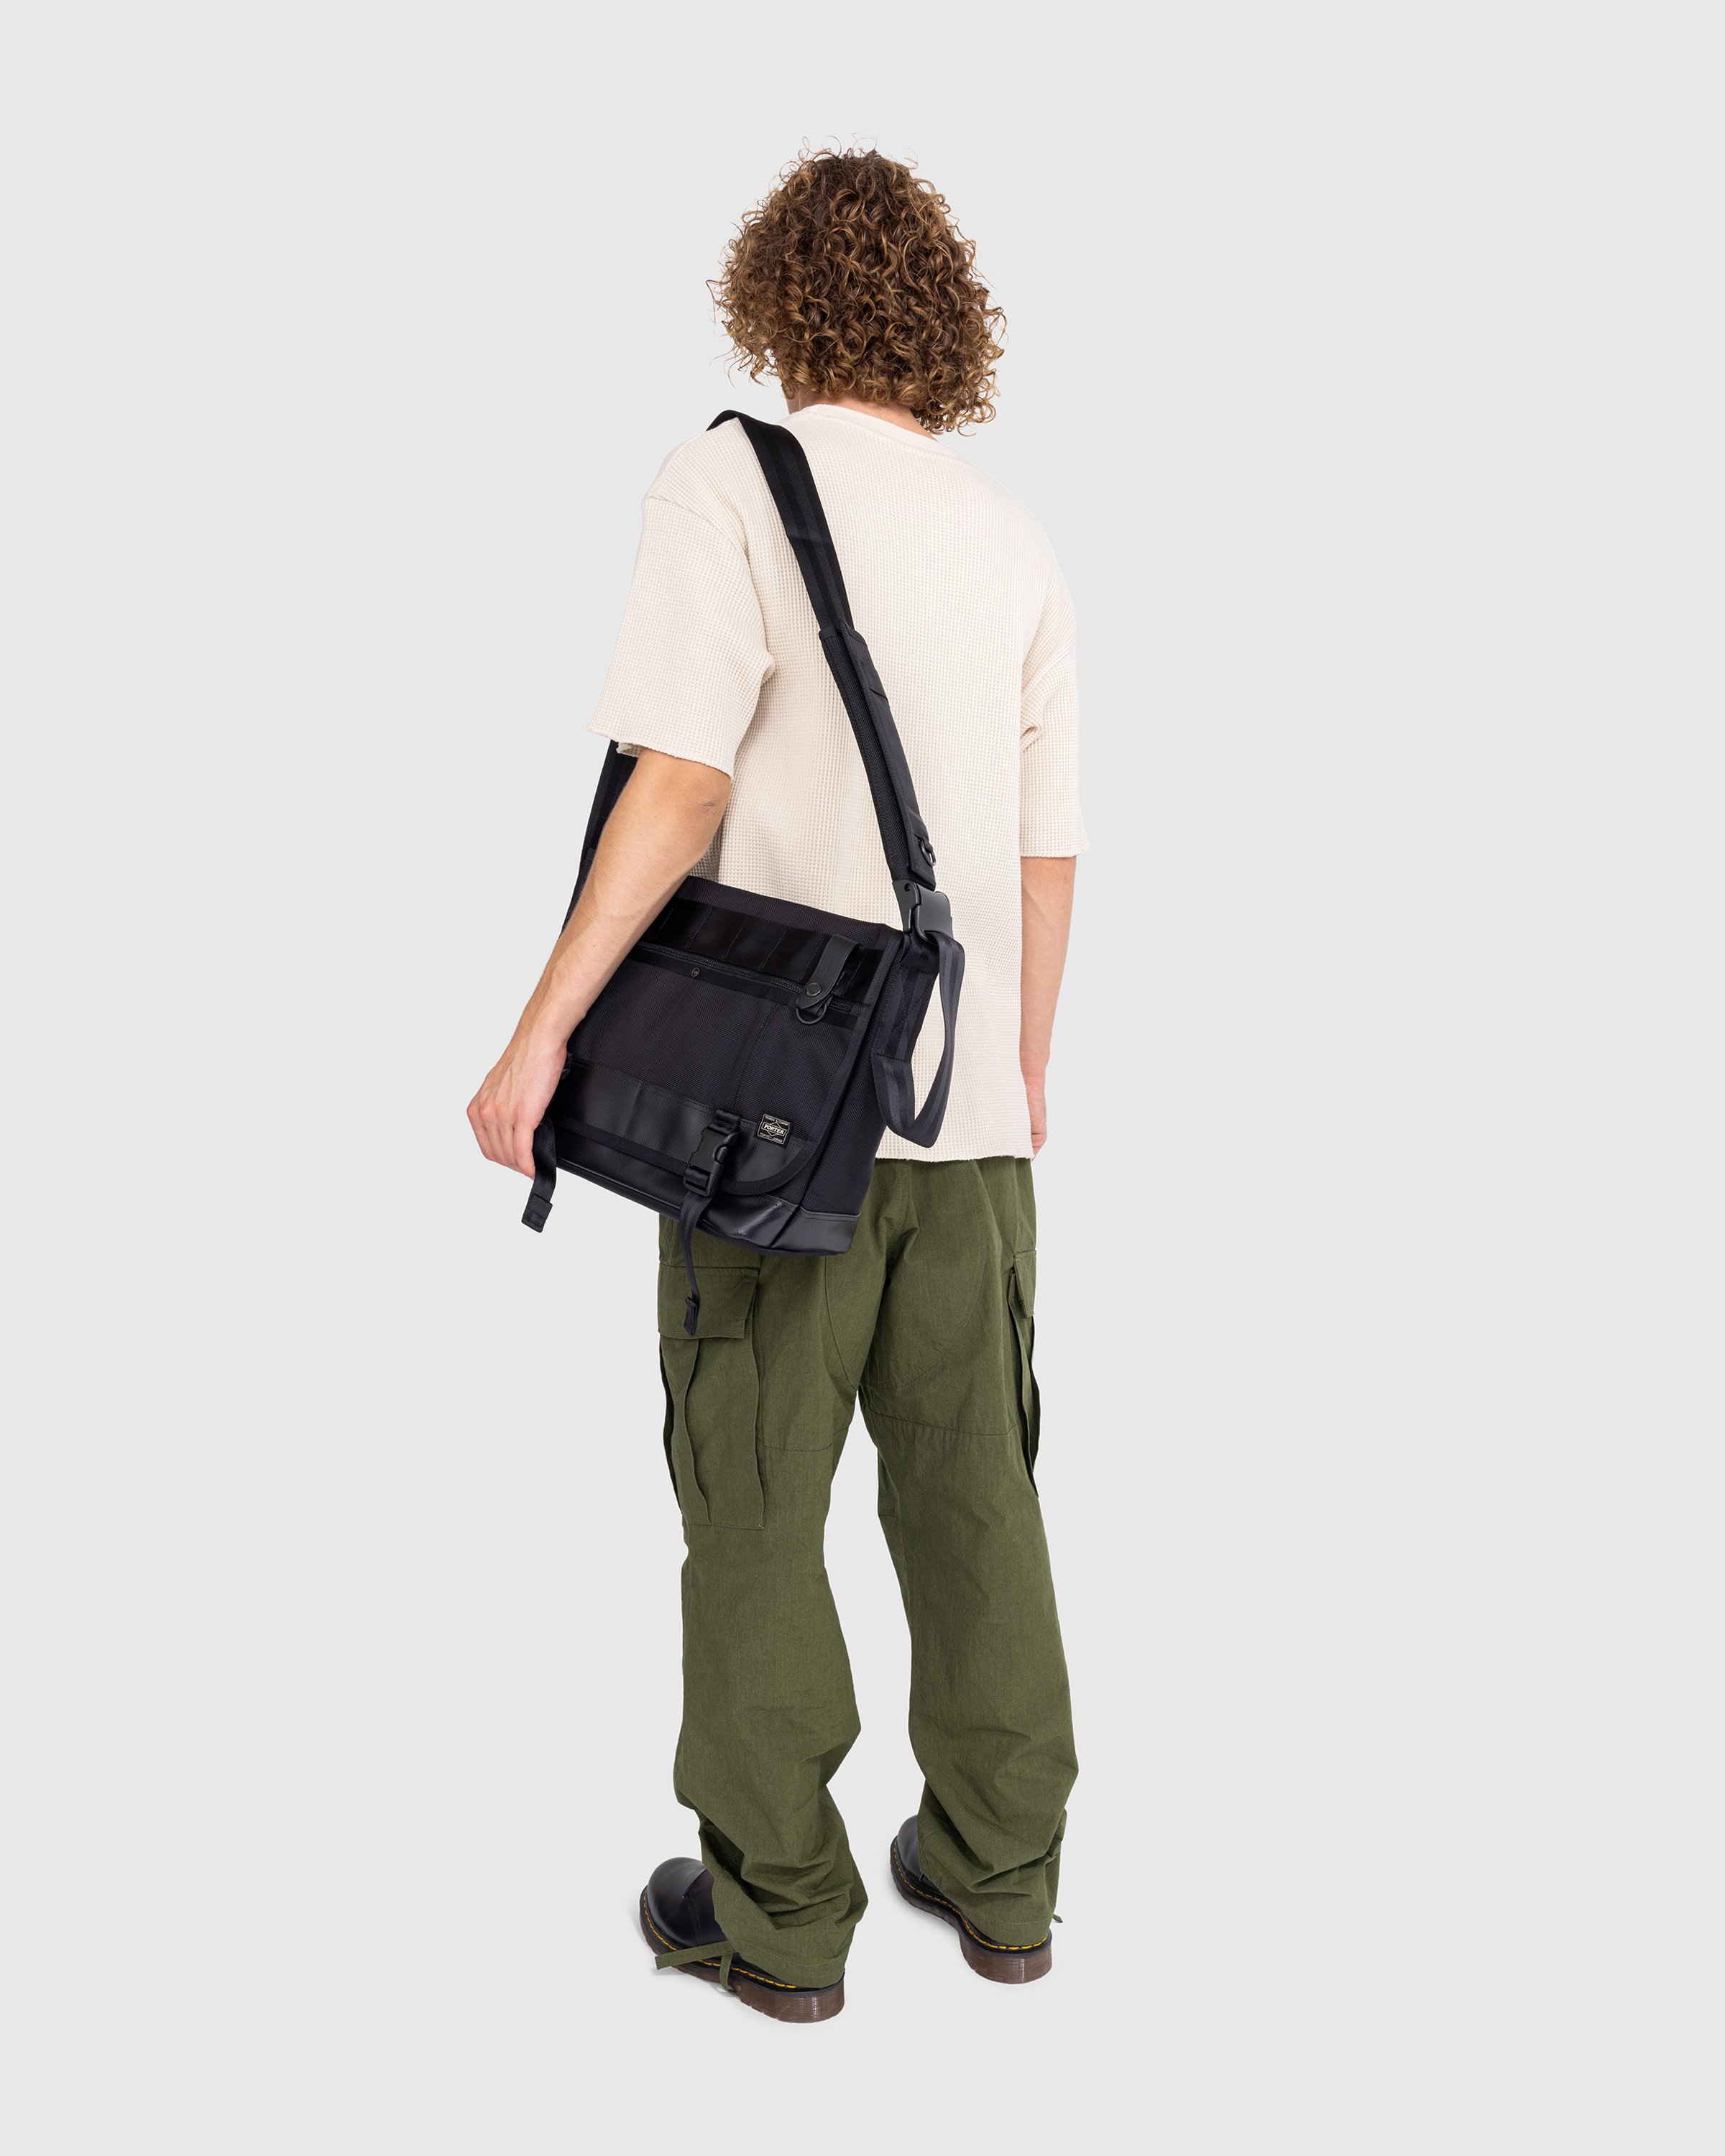 Porter-Yoshida & Co. - Heat Messenger Bag Black - Accessories - Black - Image 4